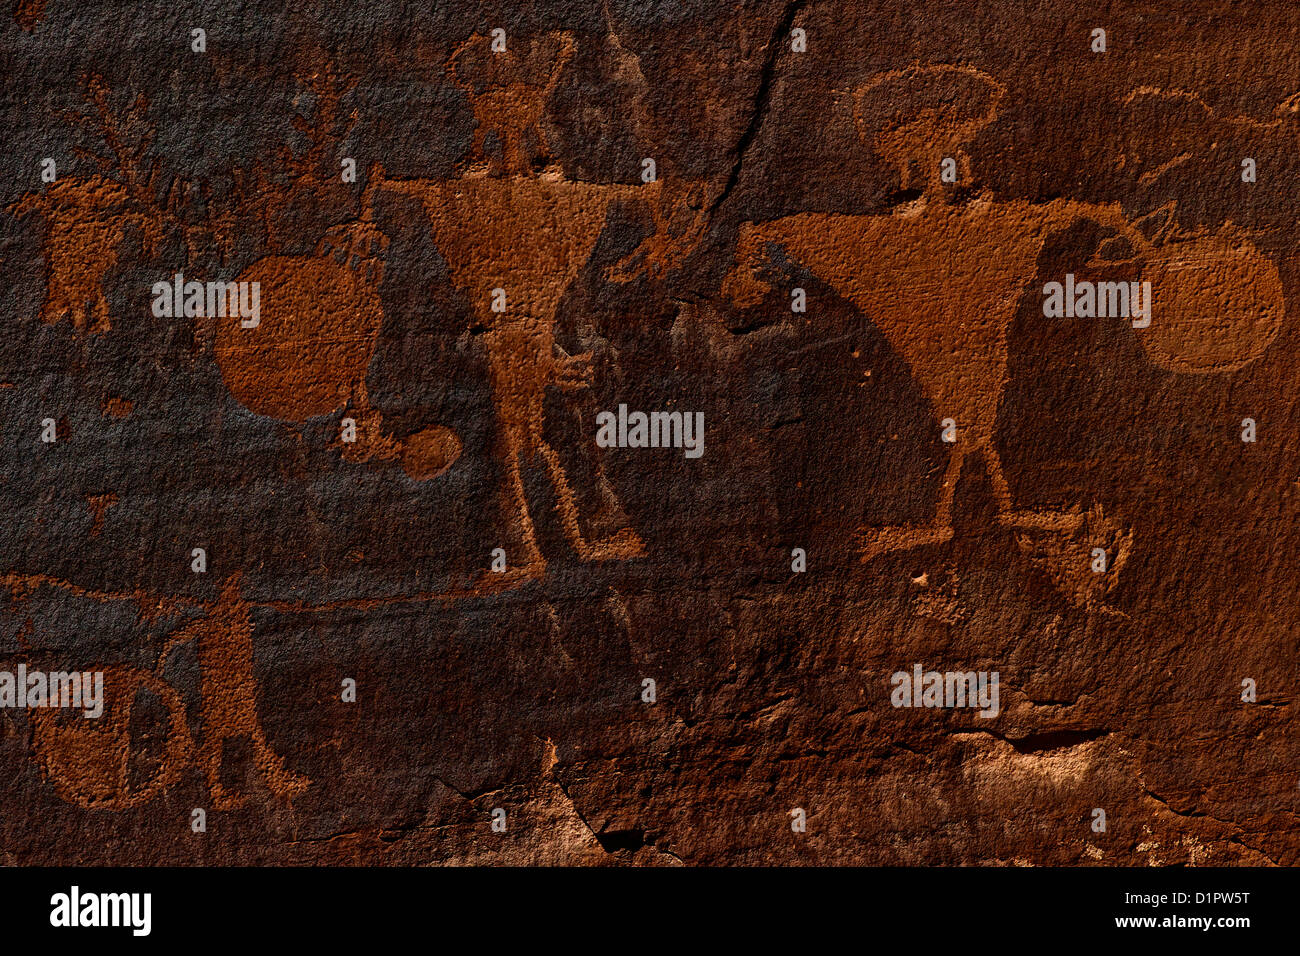 Horned anthropomorphs holding shields, Formative Period Petroglyphs, Utah Scenic Byway 279, Potash Road, Rock Art Sites, Moab, Stock Photo